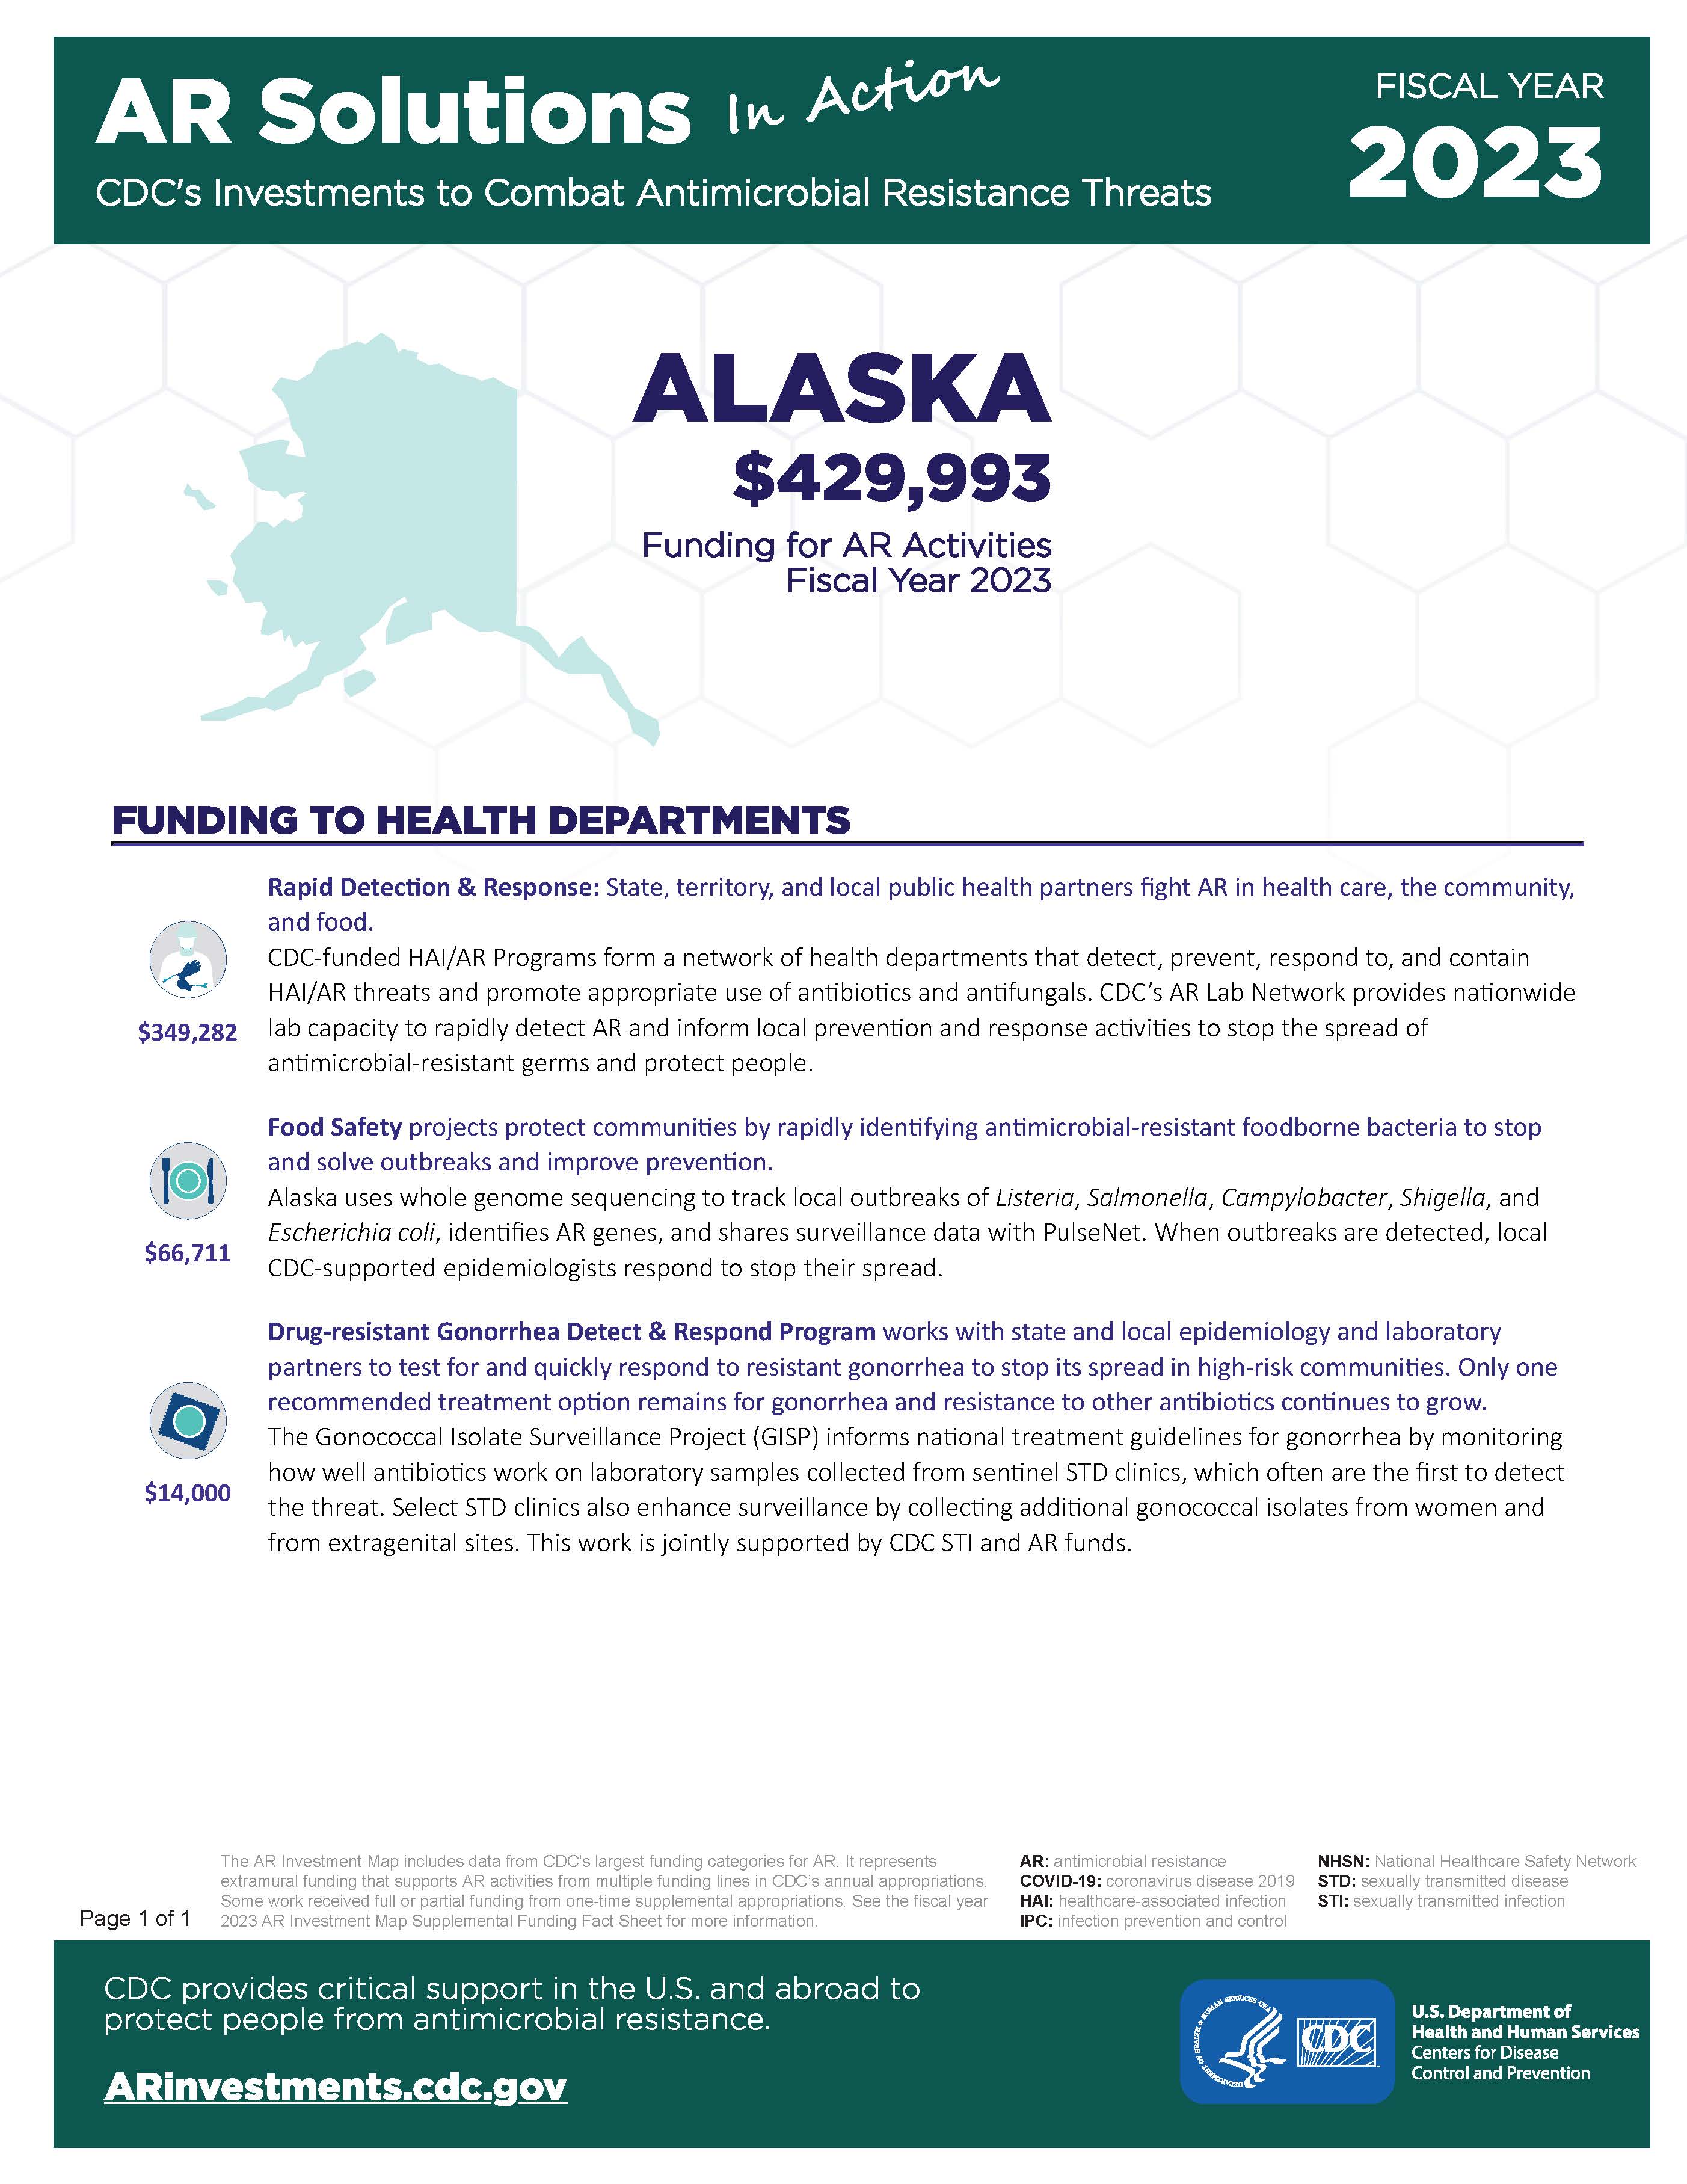 View Factsheet for Alaska